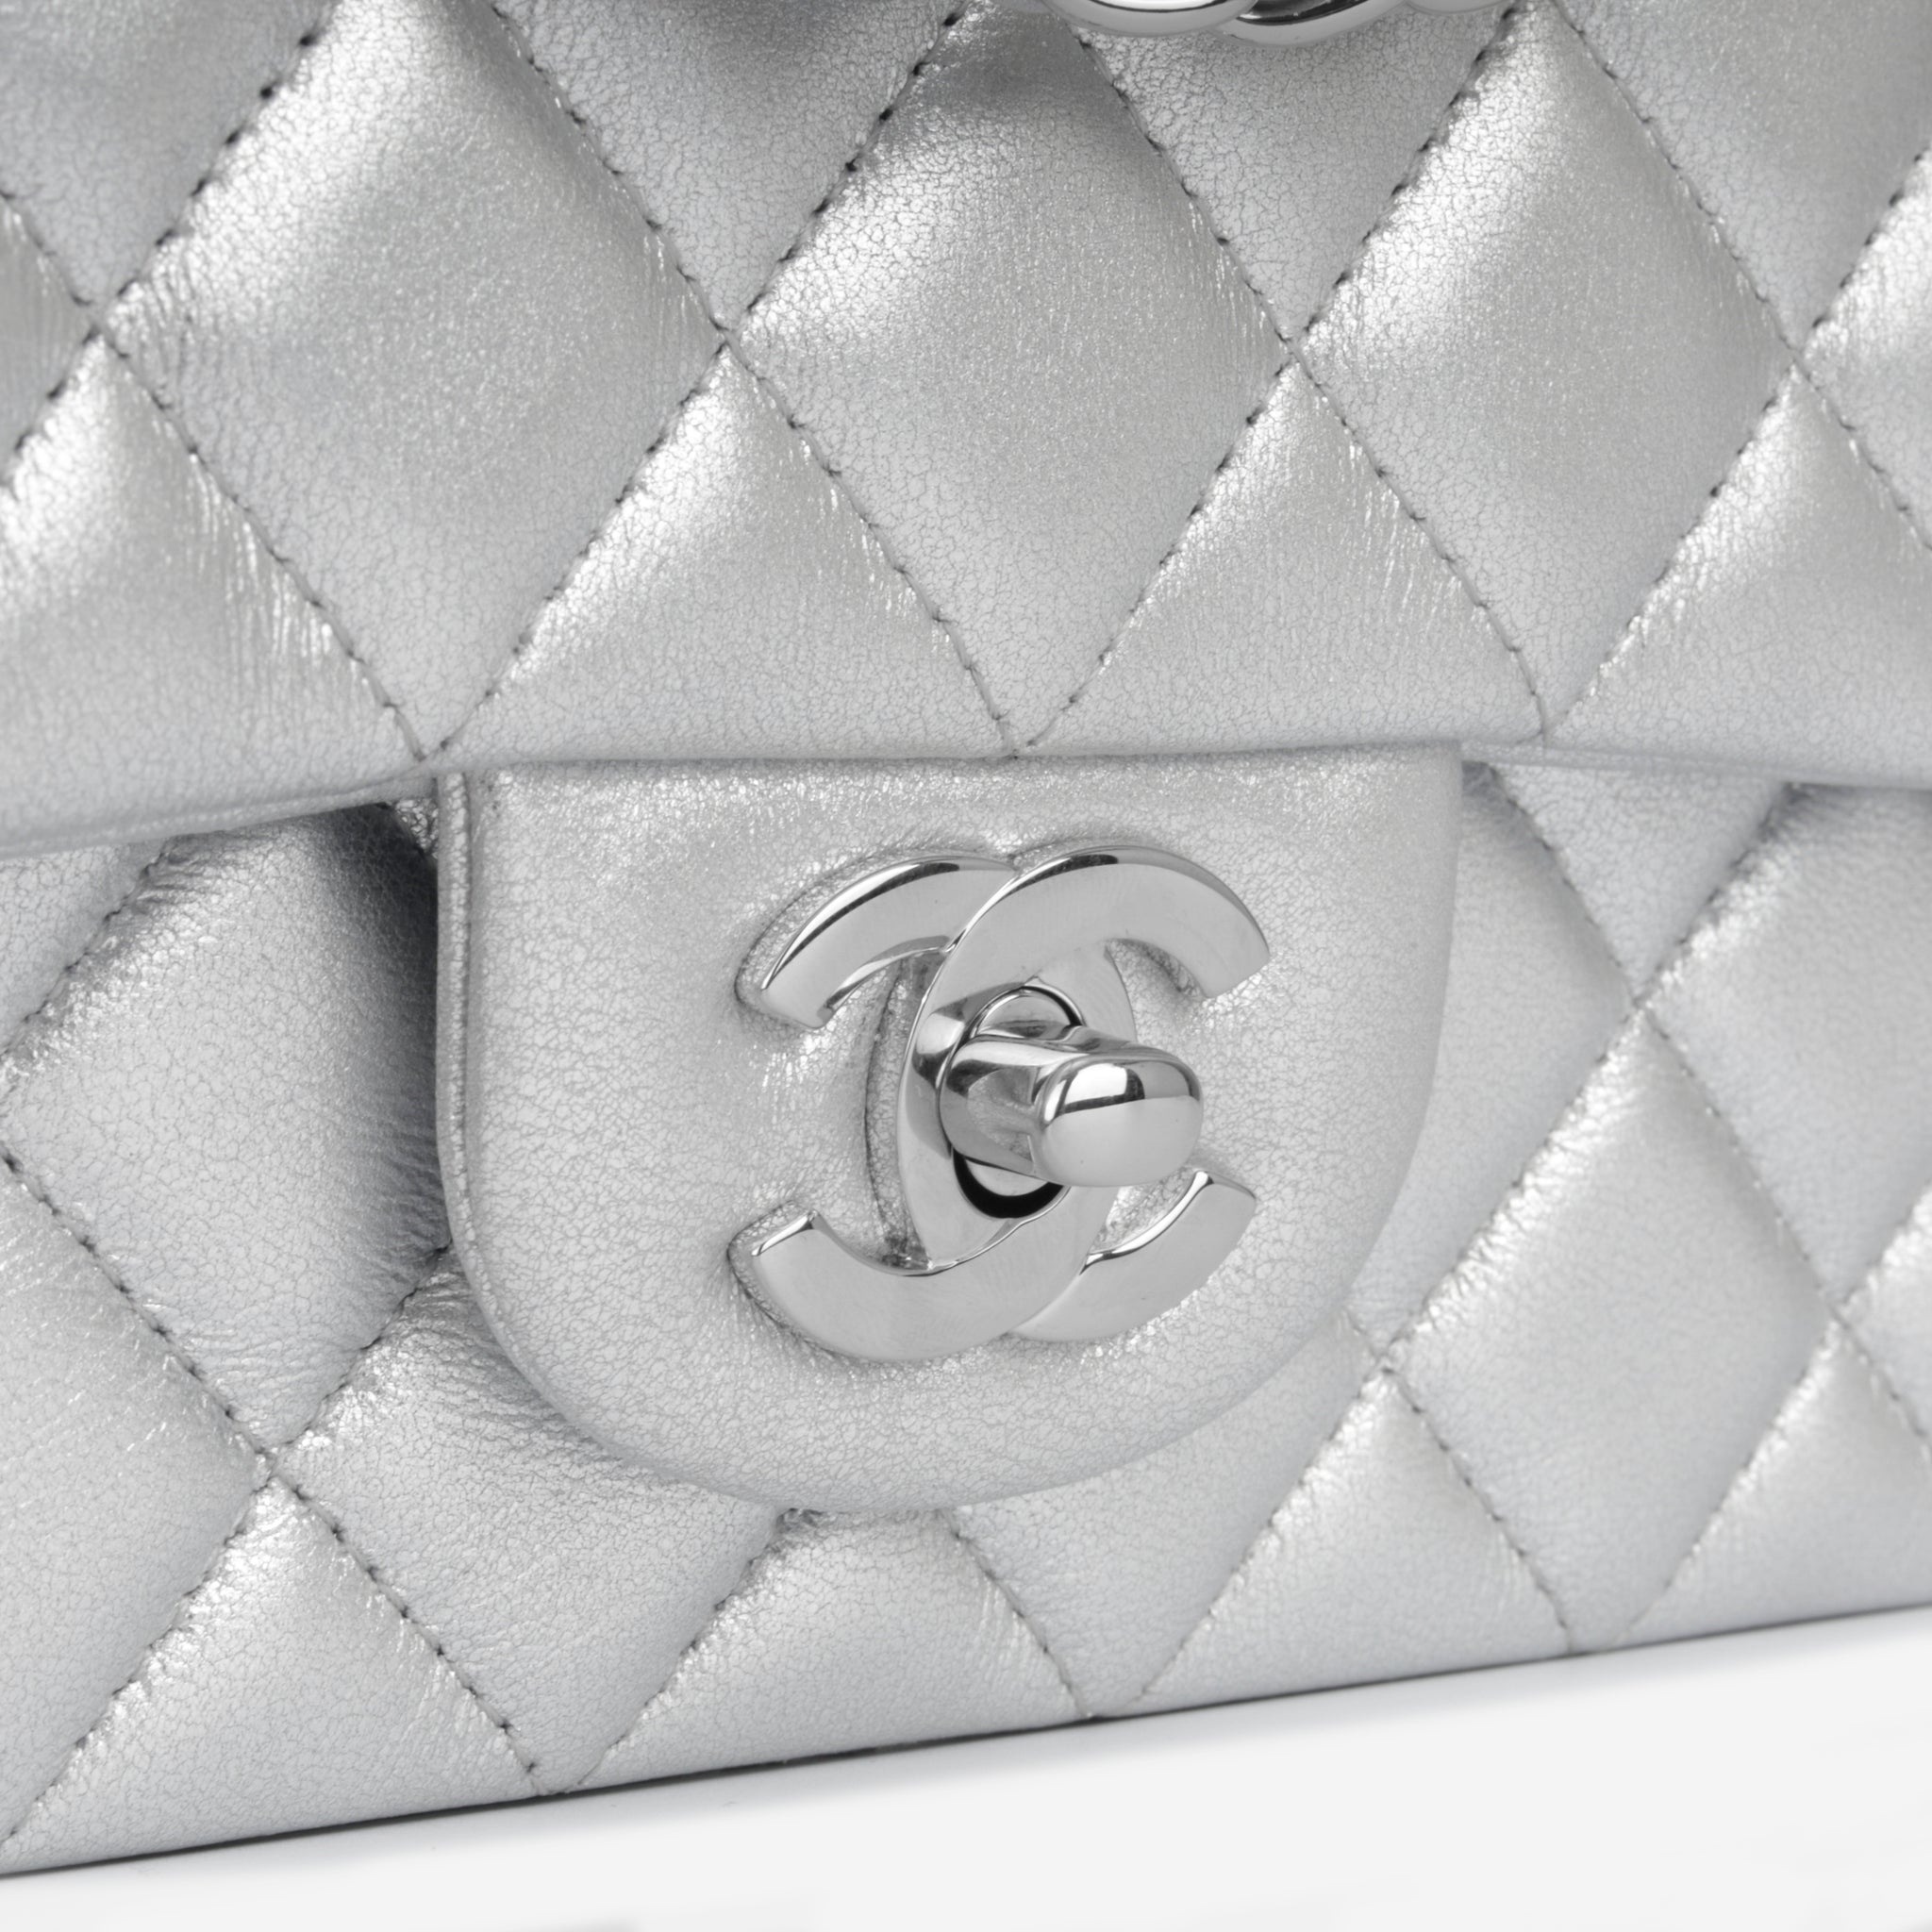 Chanel - Classic Flap Bag - Mini Rectangular - Silver Metallic